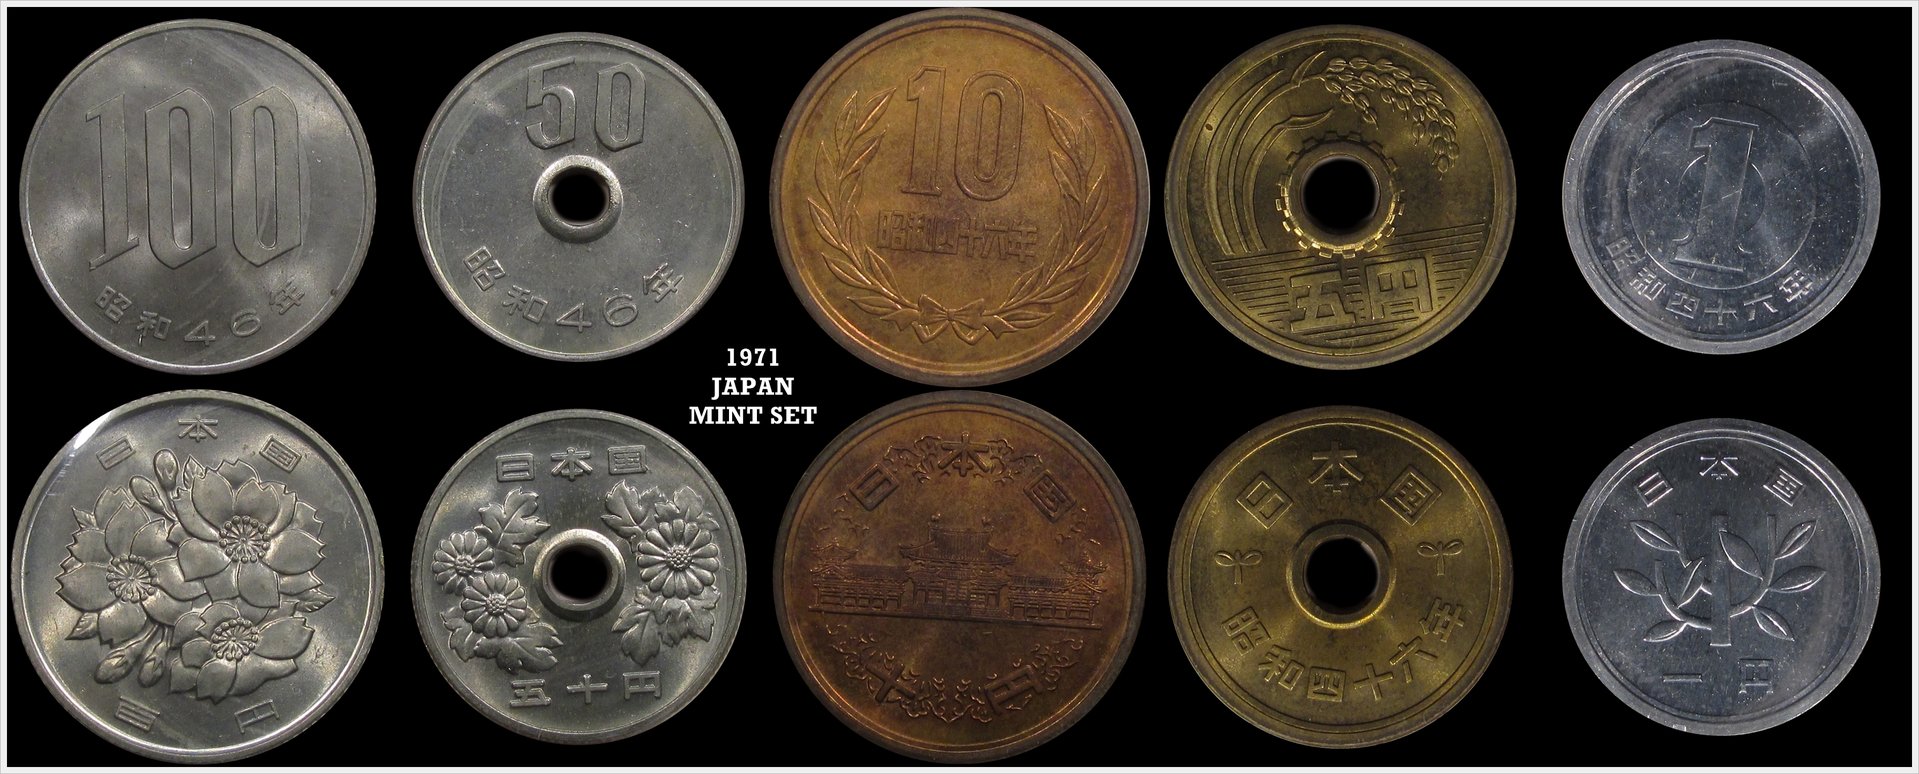 Japan 1971 Mint Set.jpg